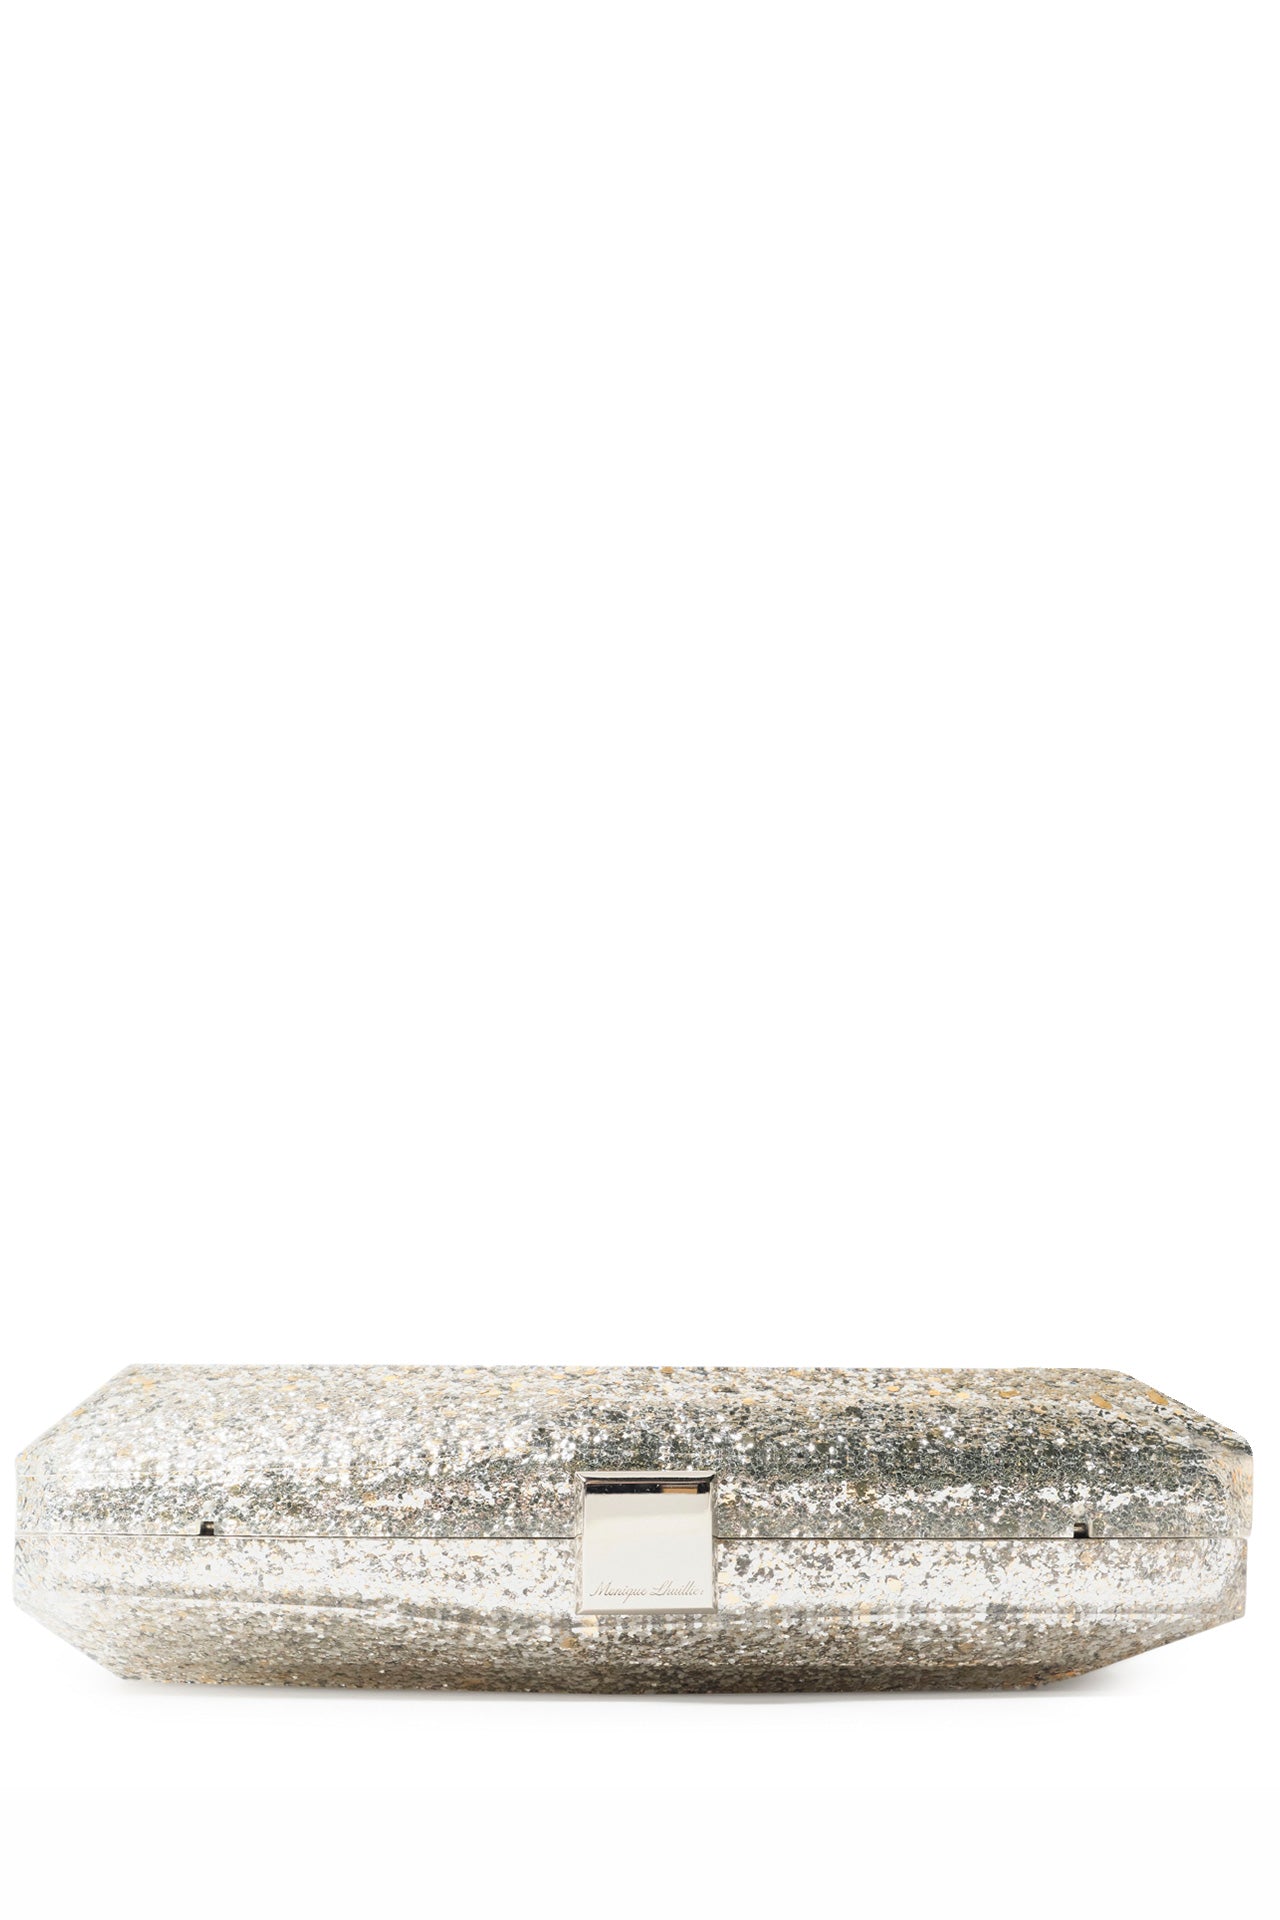 Monique Lhuillier lucite faceted minaudière handbag in Silver Glitter with detachable chain - flat.